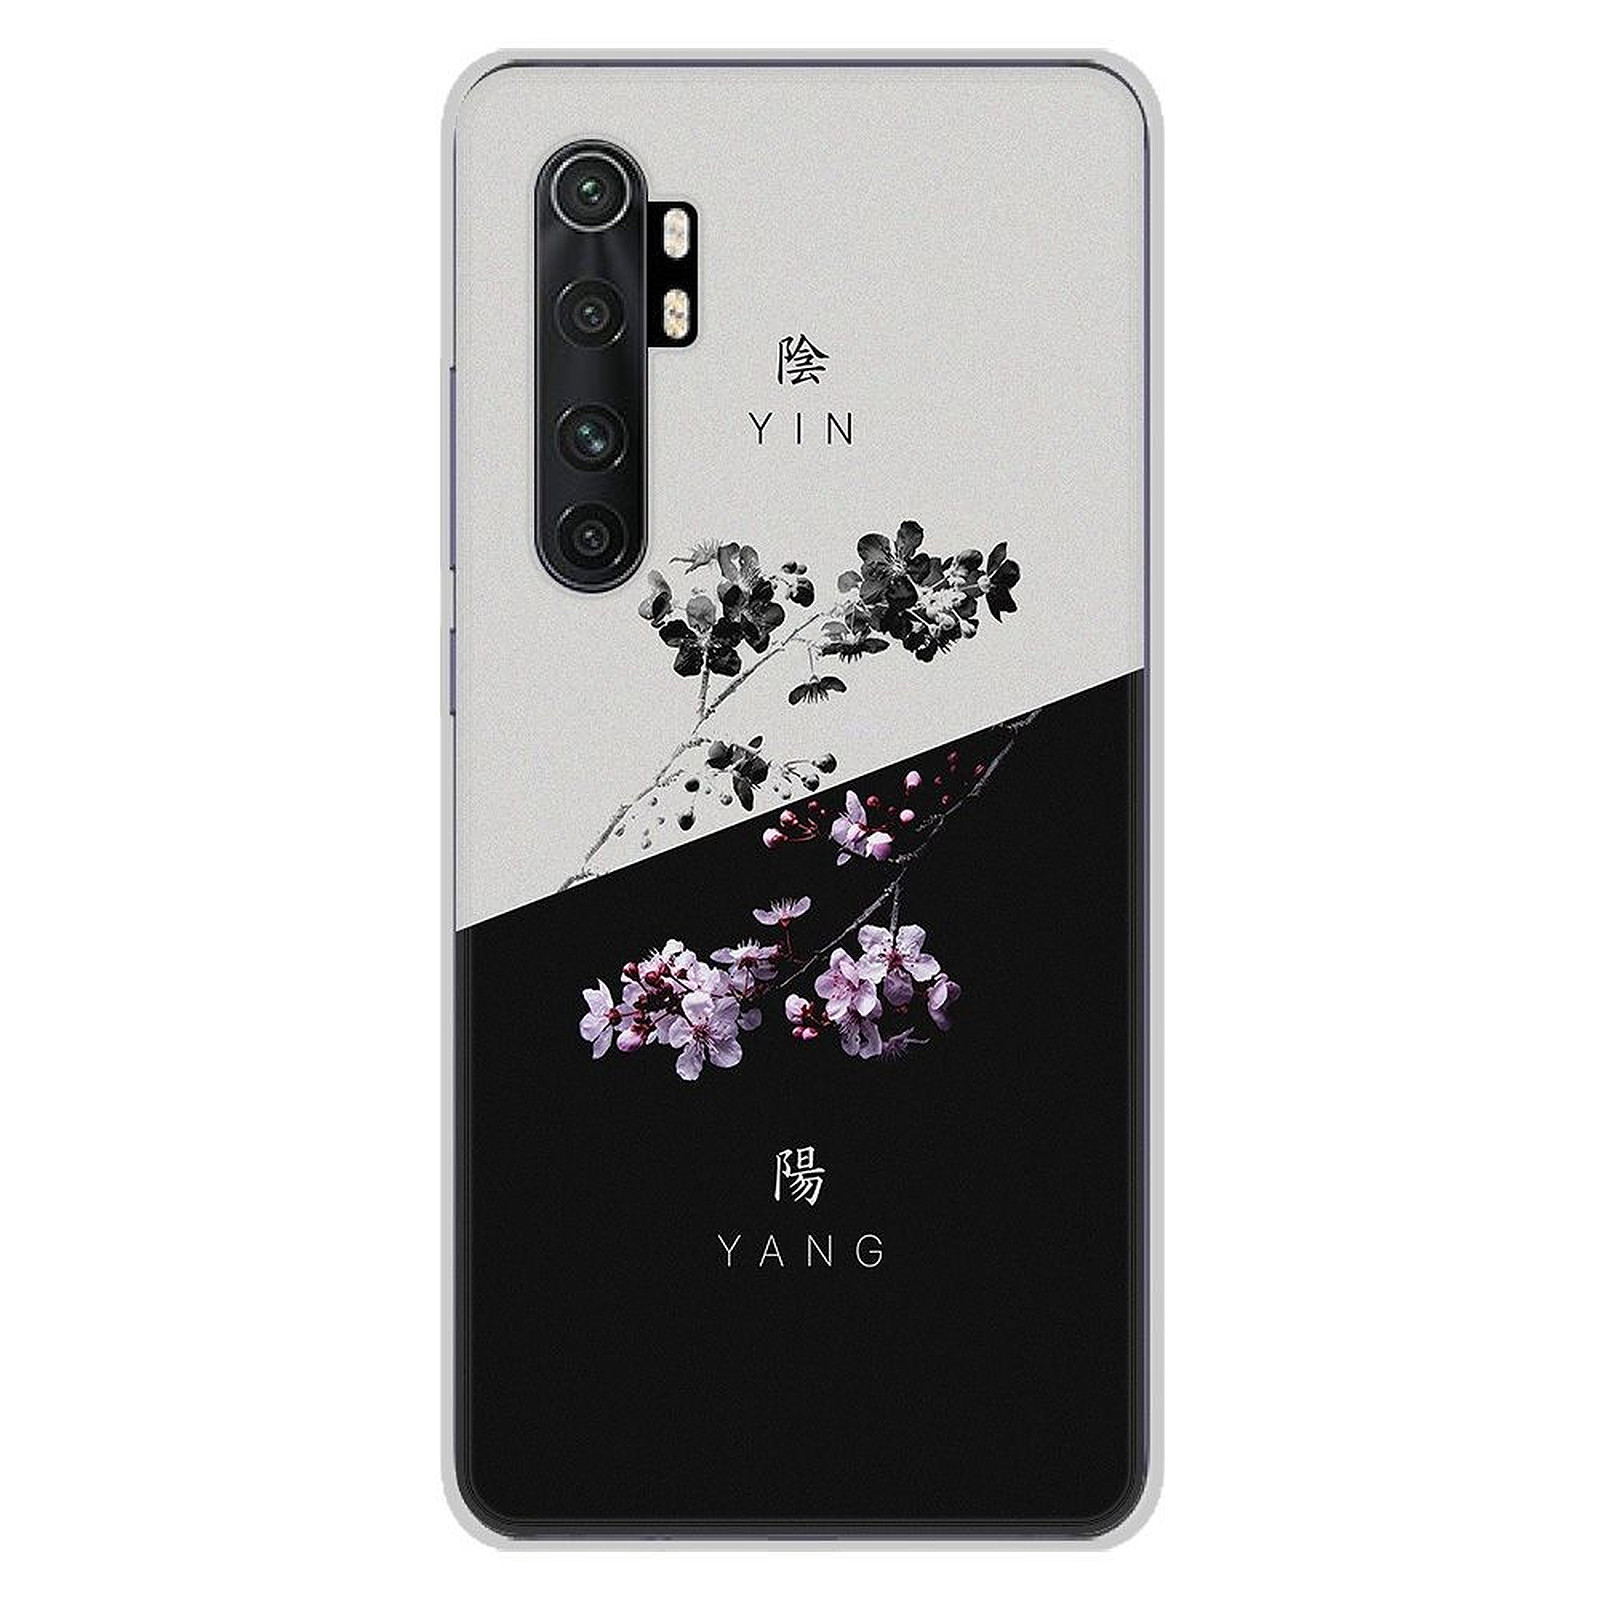 1001 Coques Coque silicone gel Xiaomi Mi Note 10 lite motif Yin et Yang - Coque telephone 1001Coques